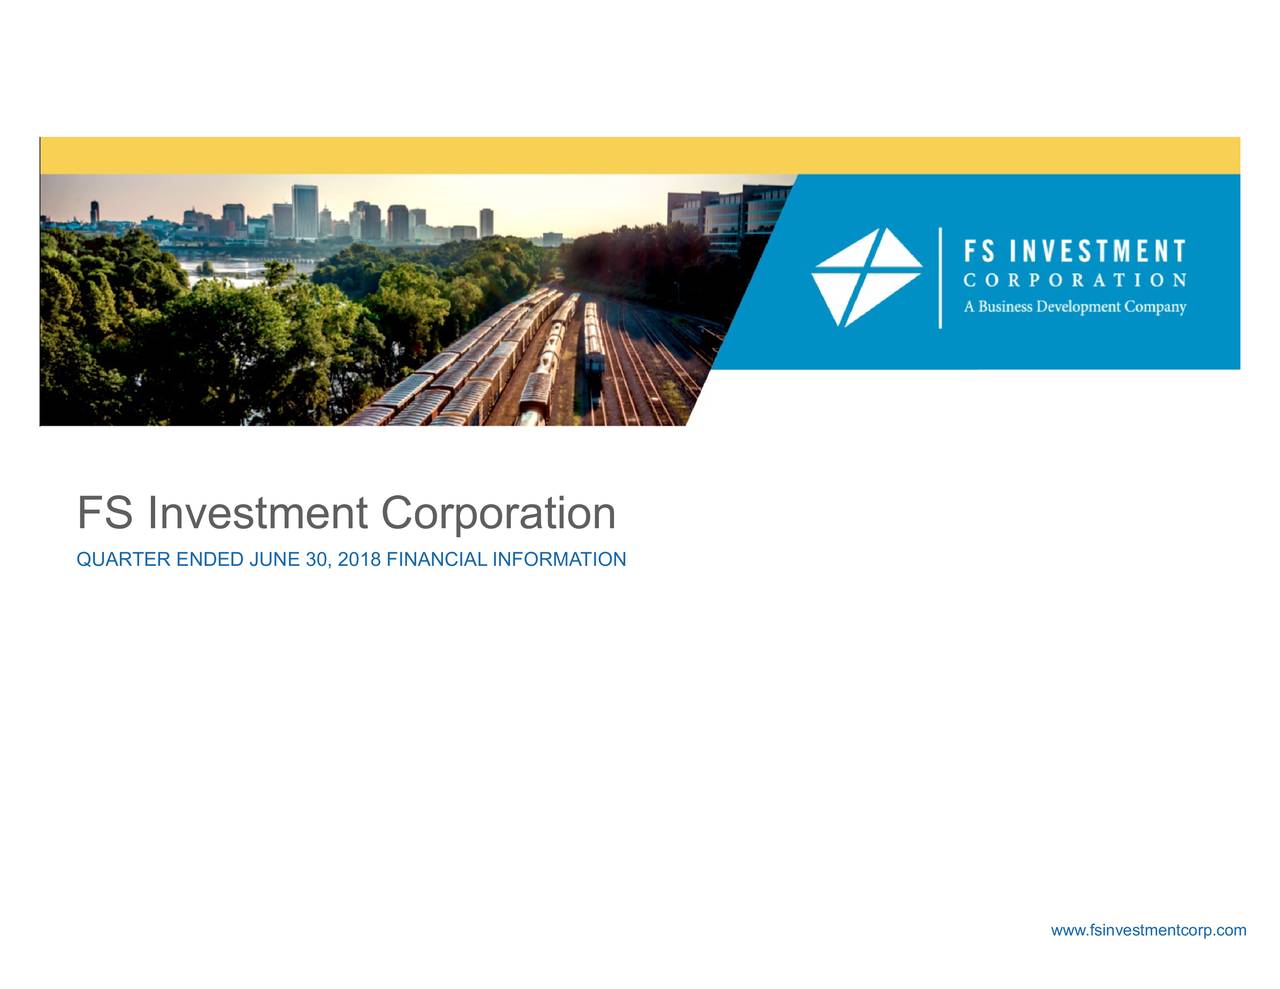 FS Investment Corporation